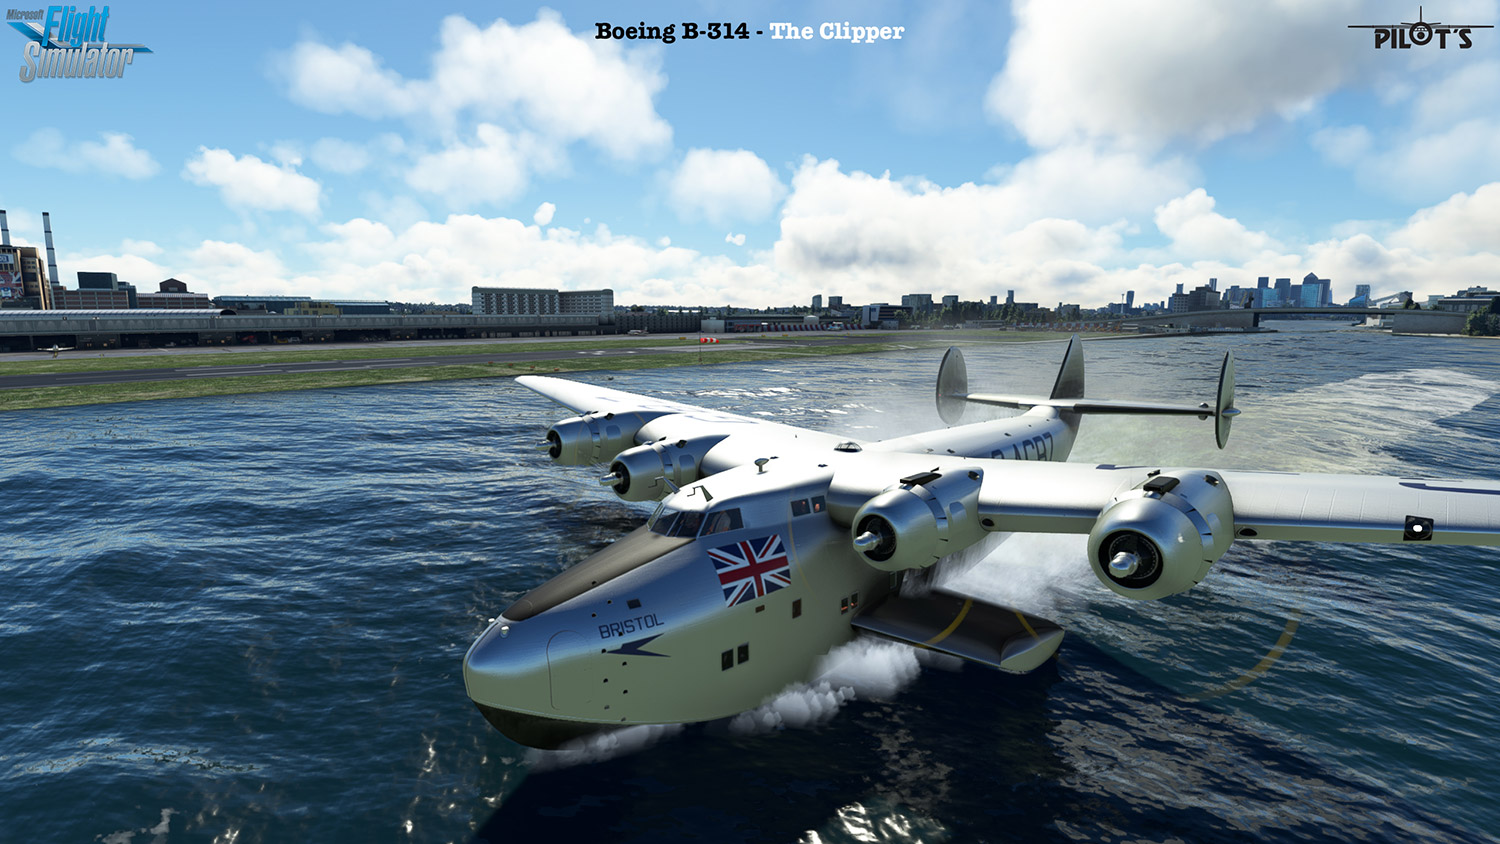 PILOT'S - Boeing B-314 - The Clipper MSFS